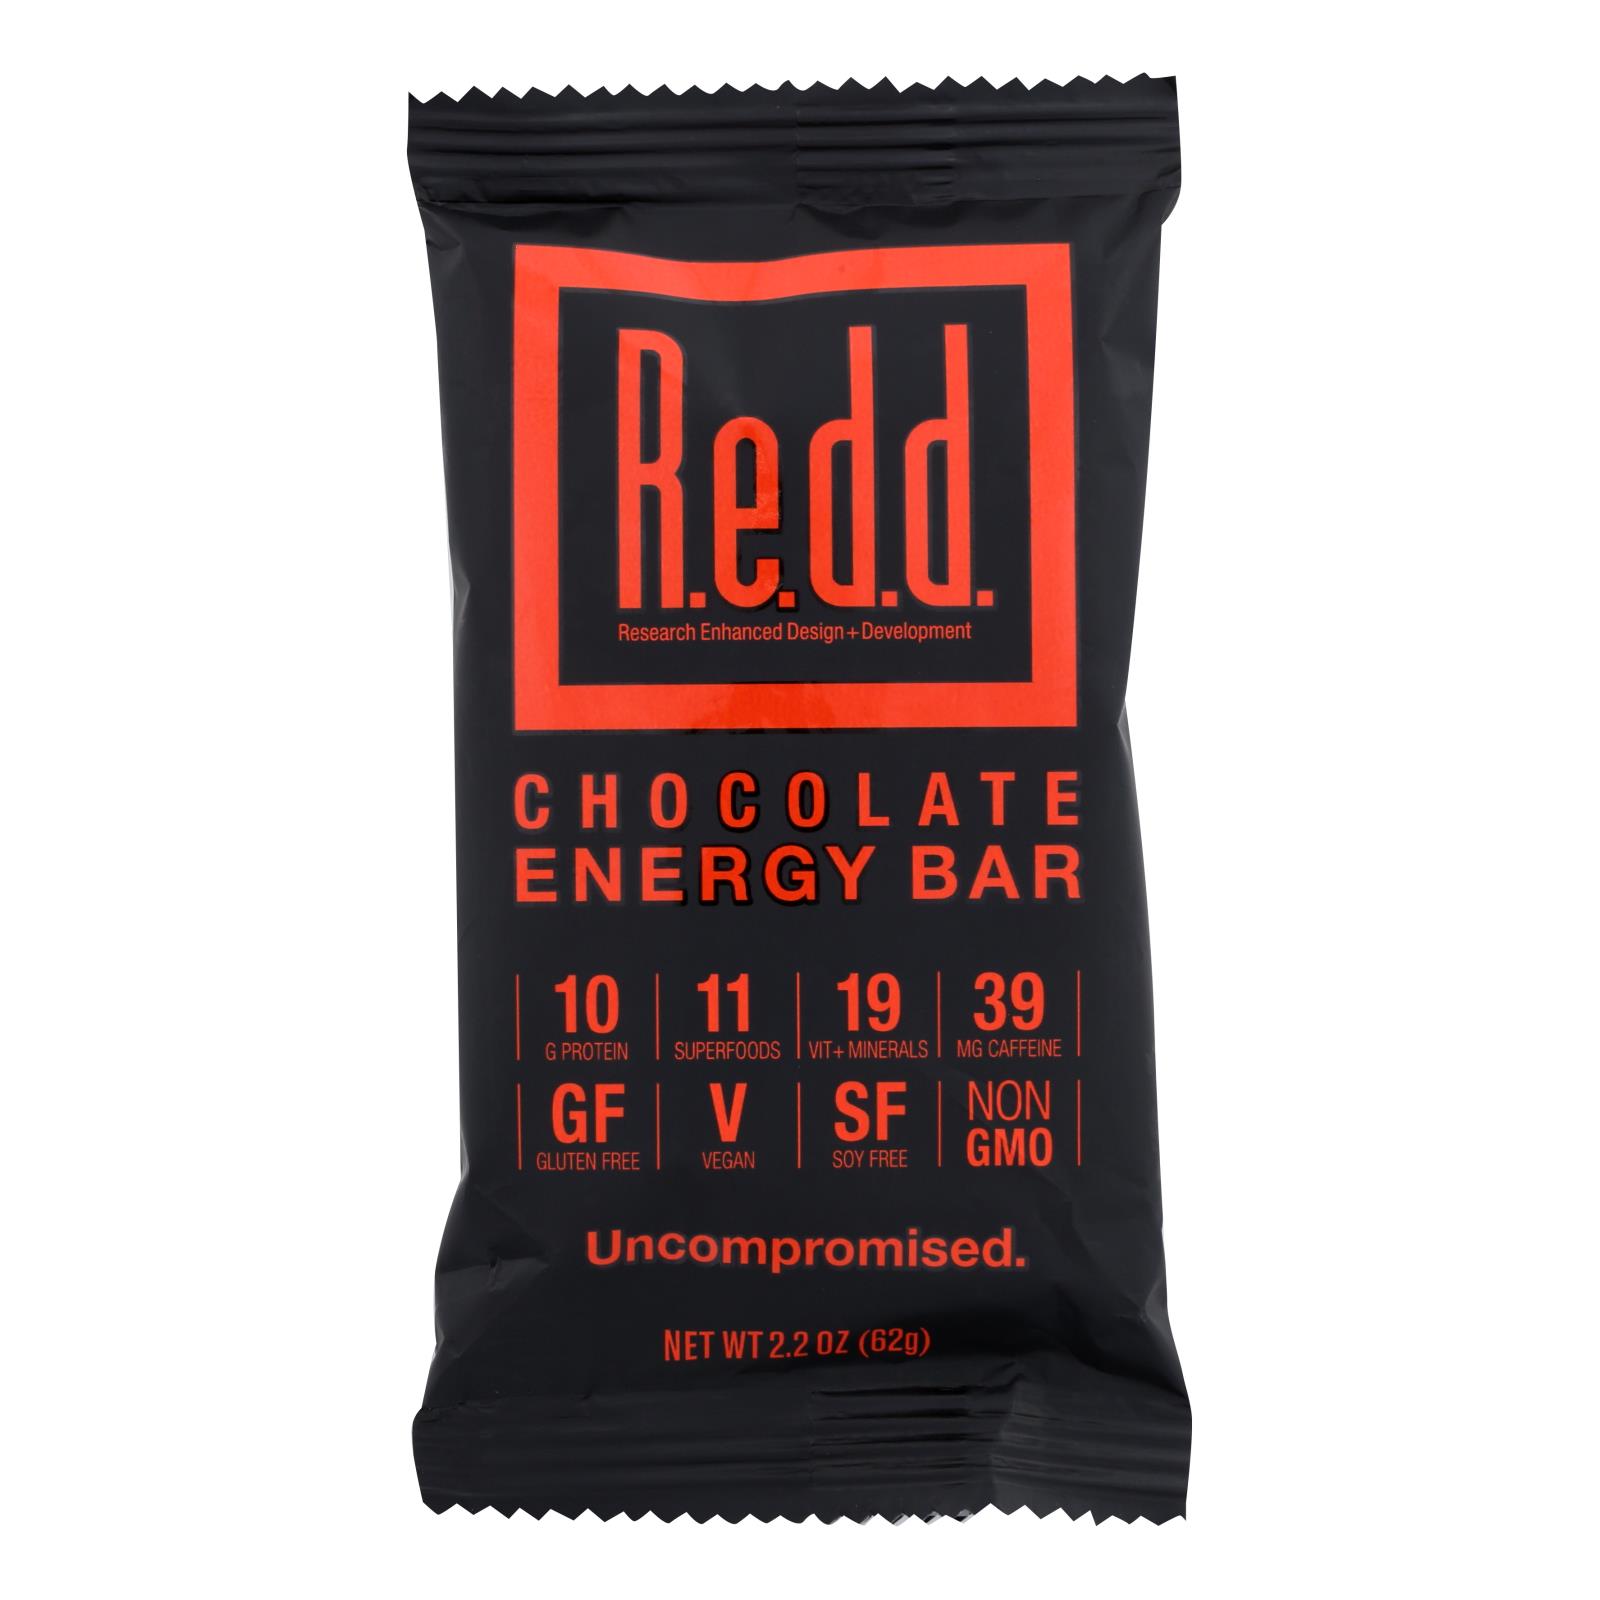 Redd Chocolate Energy Bars - 1 Each - 12 CT